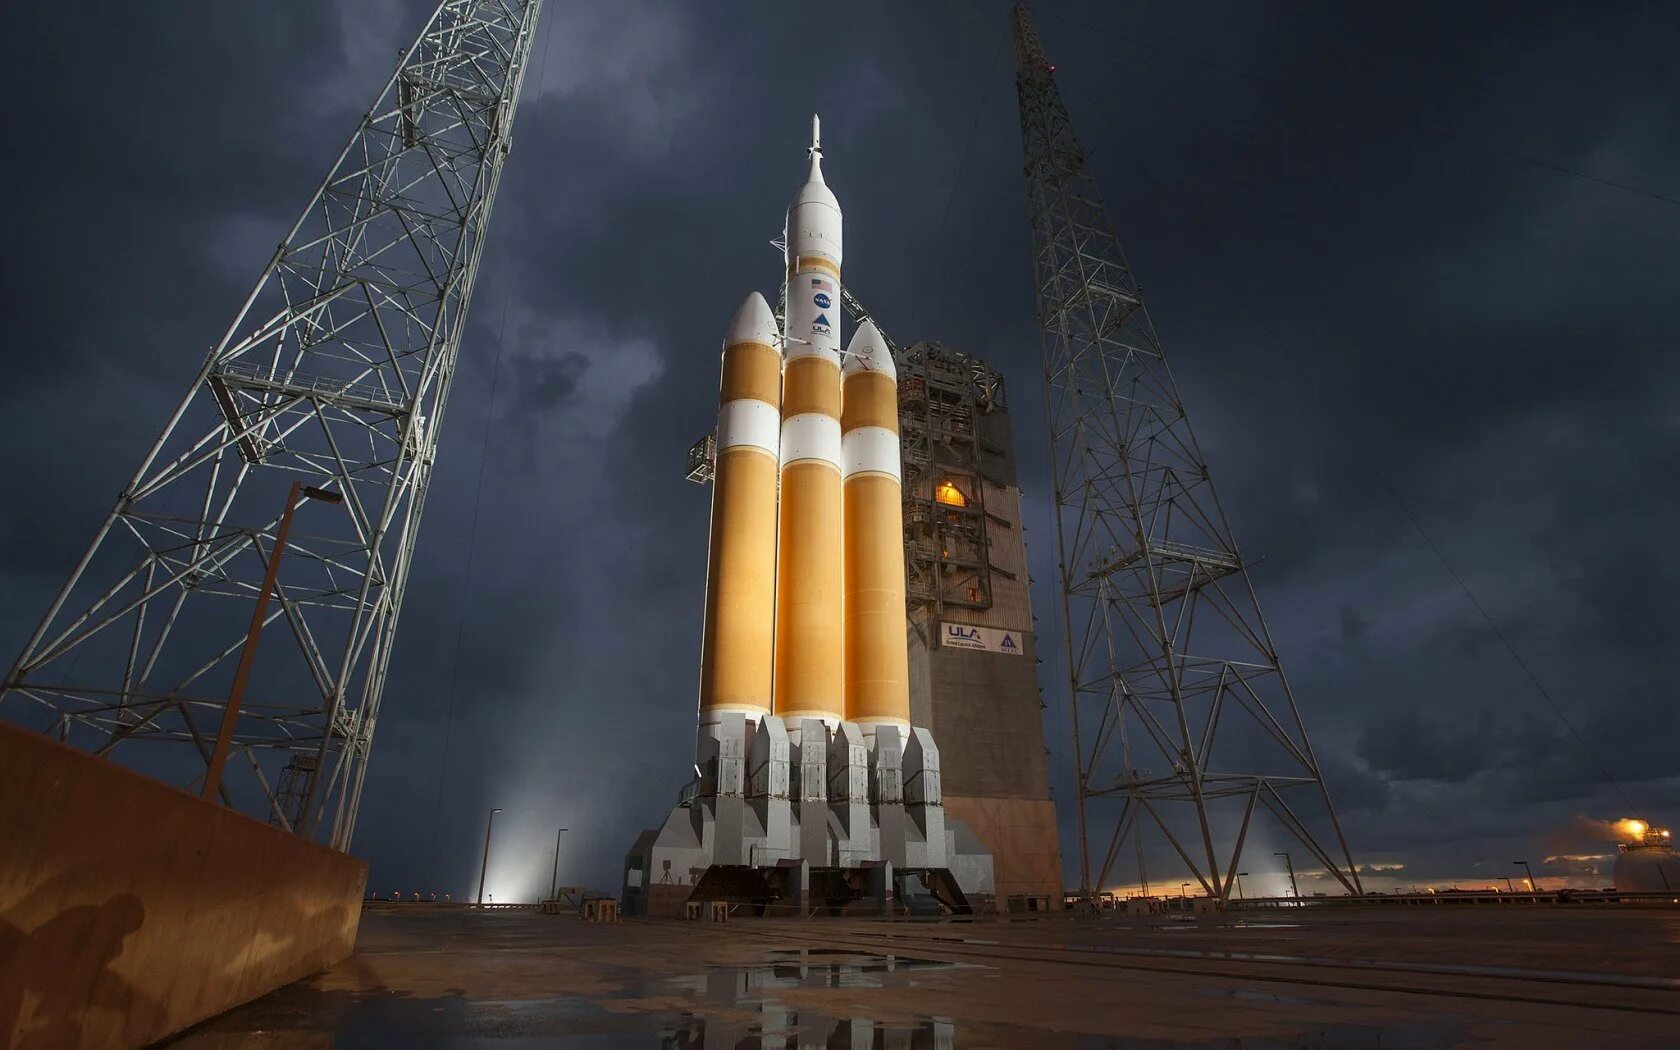 Ракета фото картинки. Ракета Орион НАСА. Шаттл Дельта 4 хеви старт. Орион ракета США. Дельта 4 ракета Ореон.